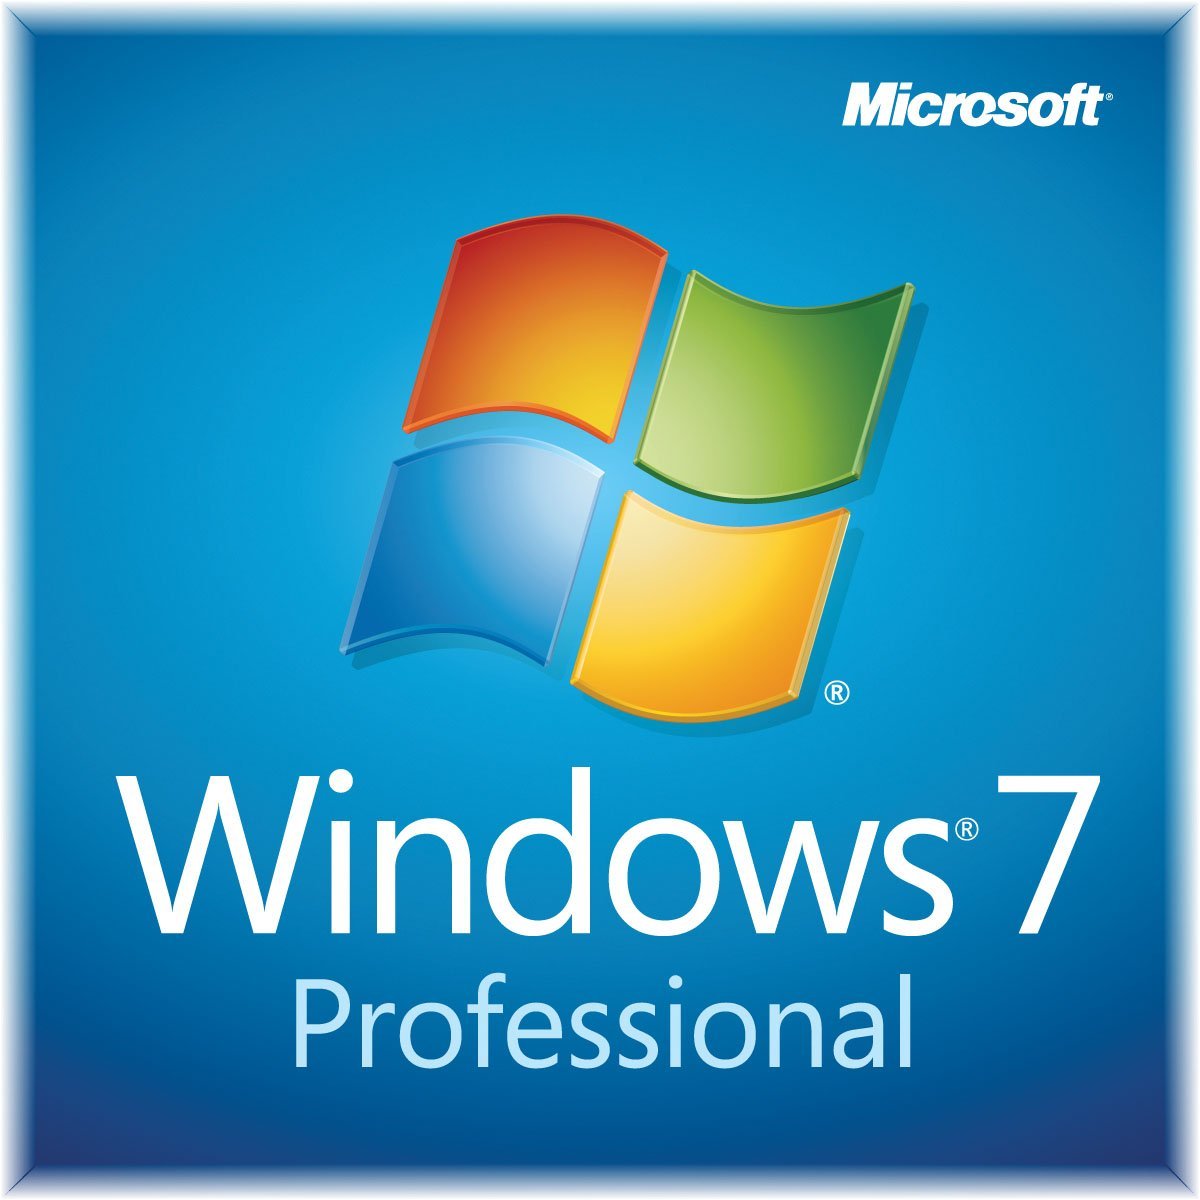 Microsoft WINDOWS 7 PROFESSIONAL 64BIT - AutoPlay